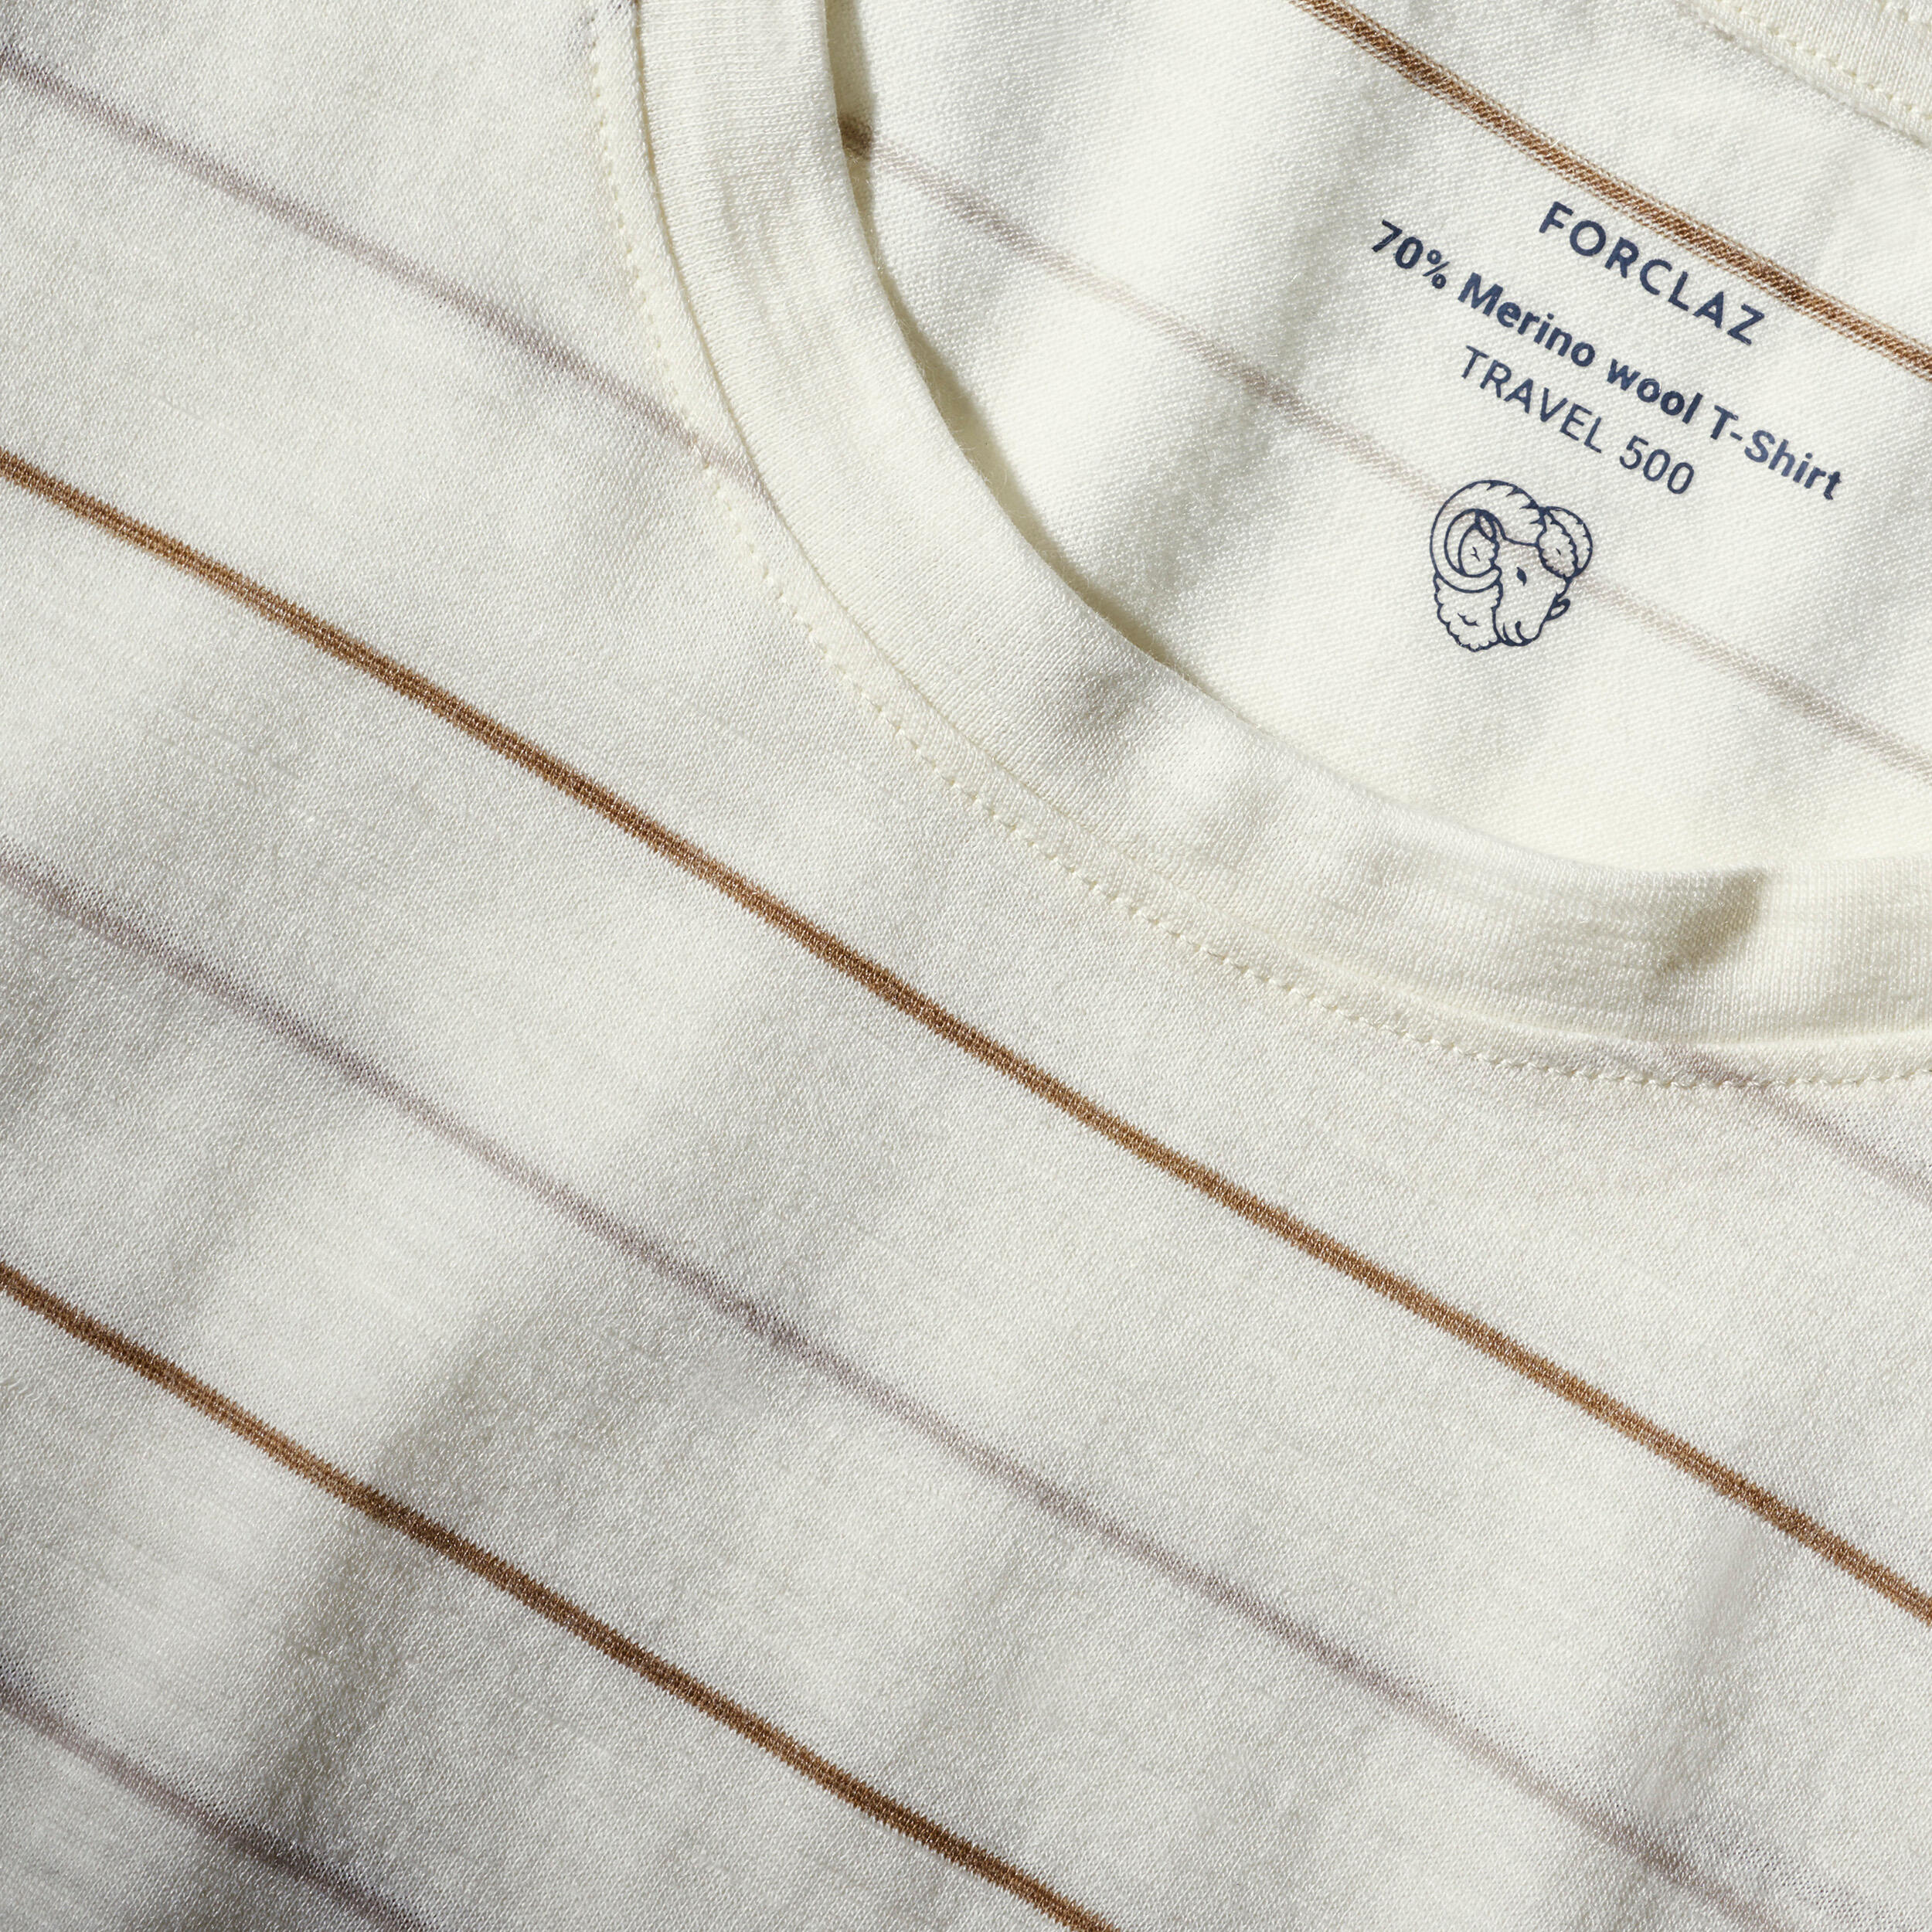 Men’s short-sleeved Merino wool hiking travel t-shirt - TRAVEL 500 white 4/6